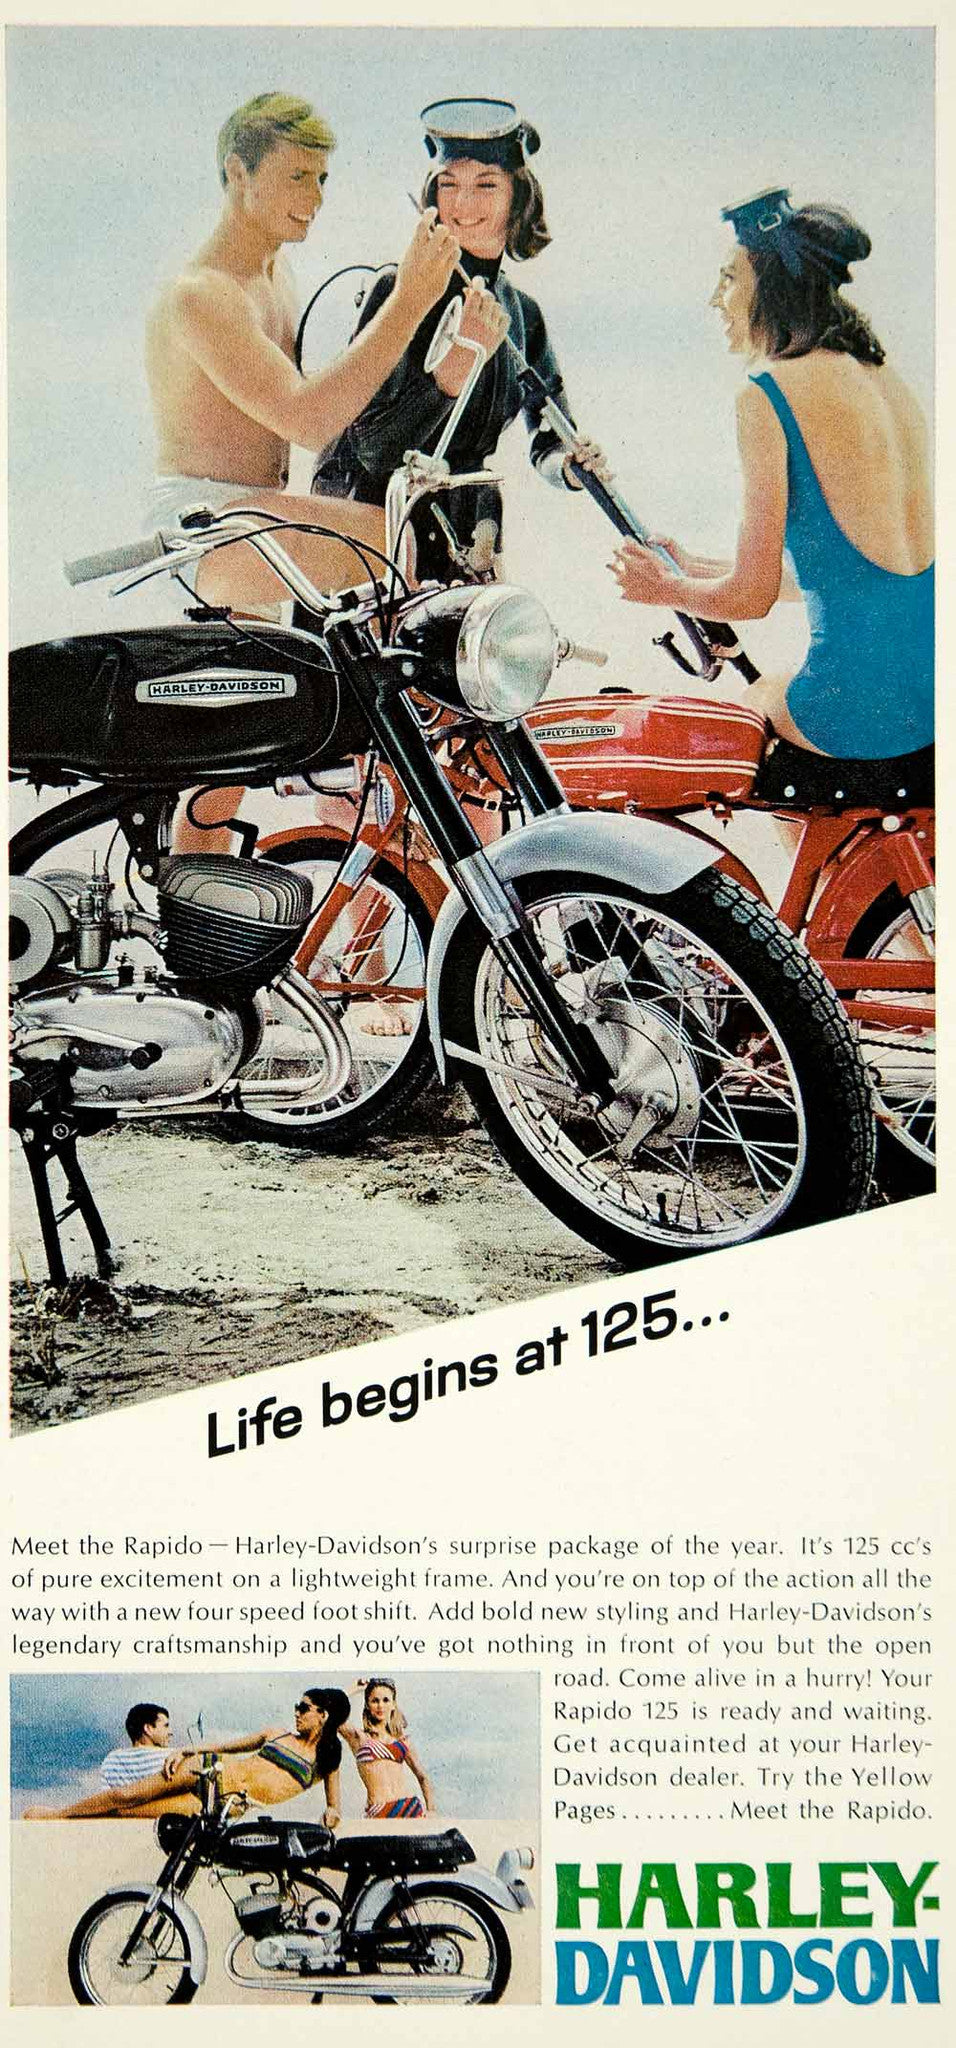 1967 Ad Vintage Harley Davidson 125 Rapido Motorcycle Motorcycling Beach YMMA3 - Period Paper
